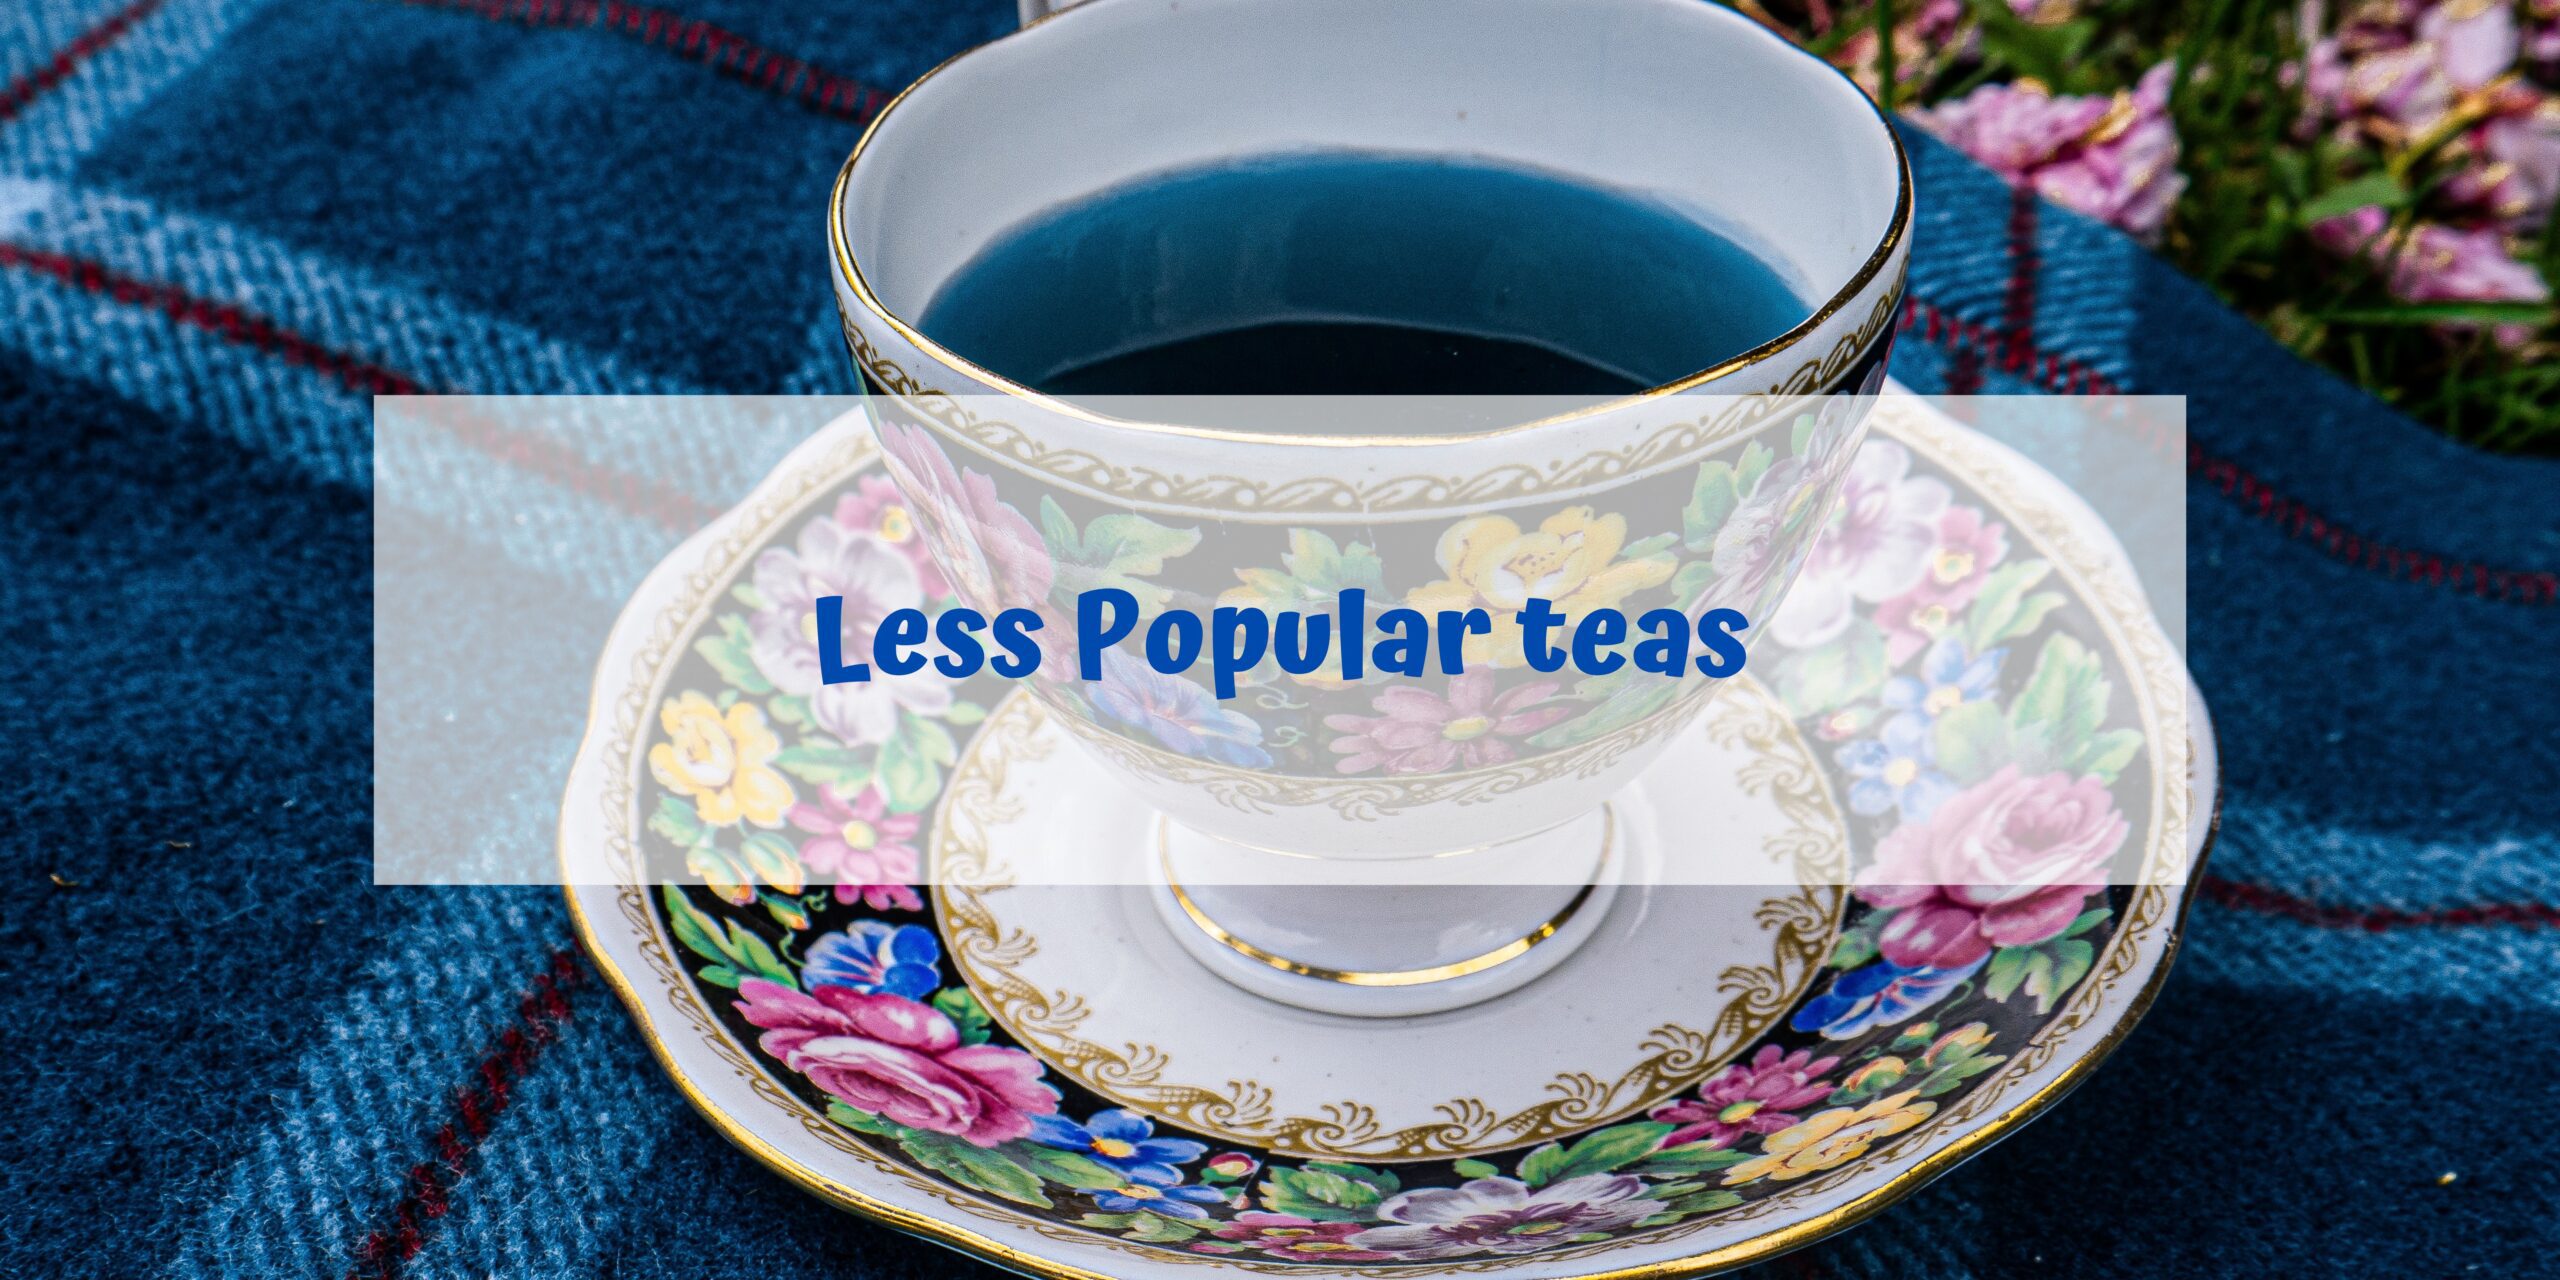 Less popular types of tea